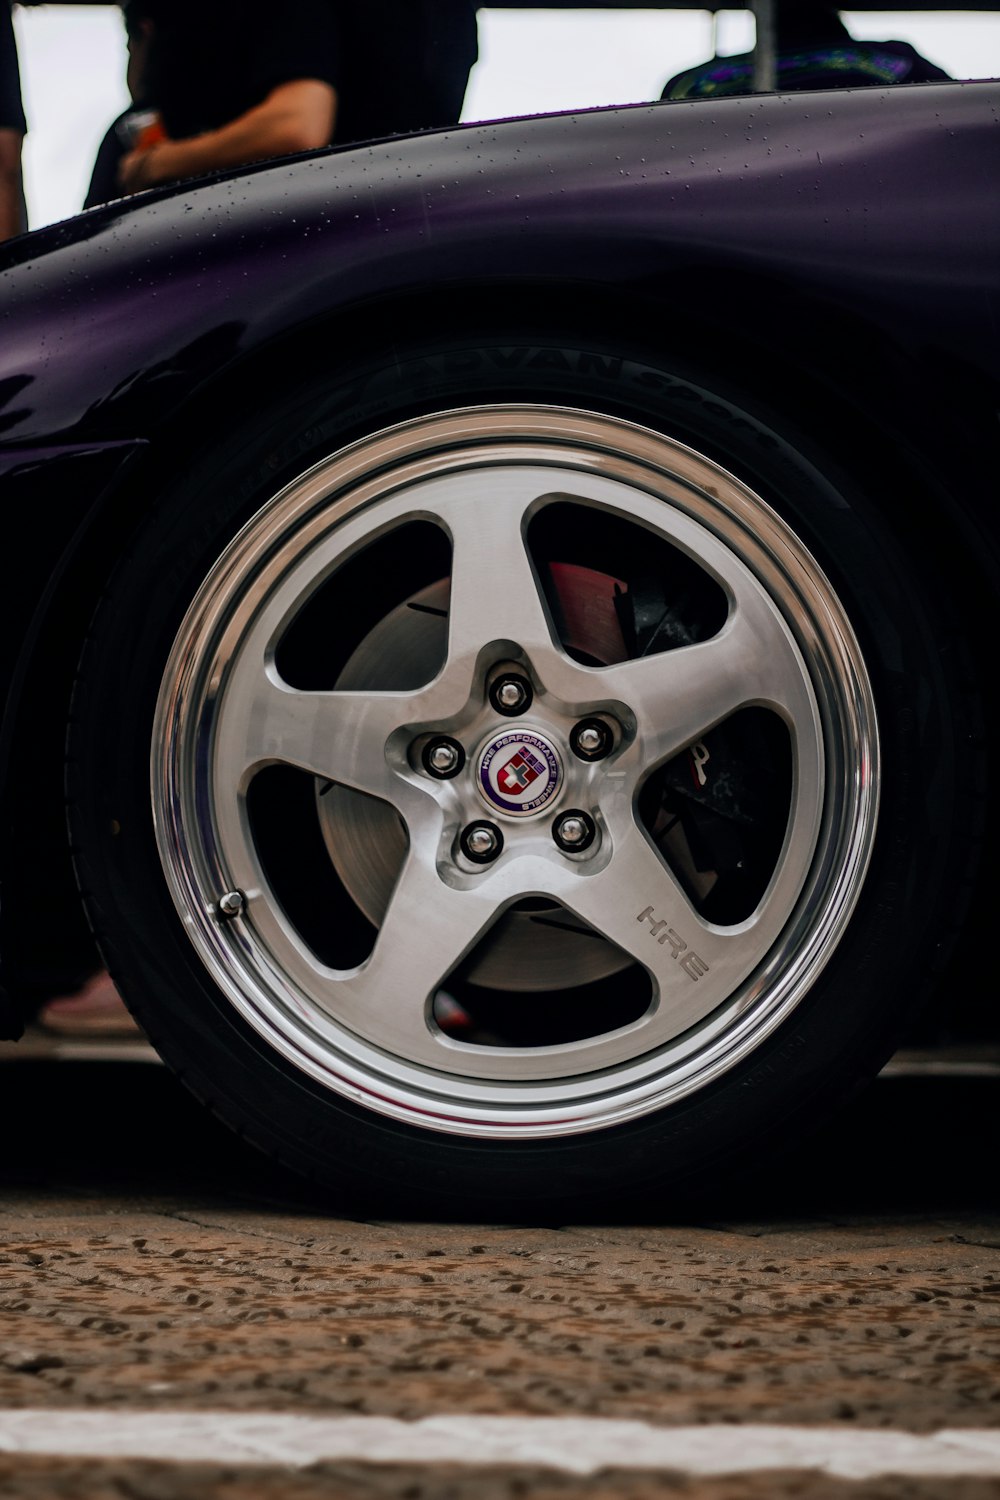 a close up of a car wheel on a car